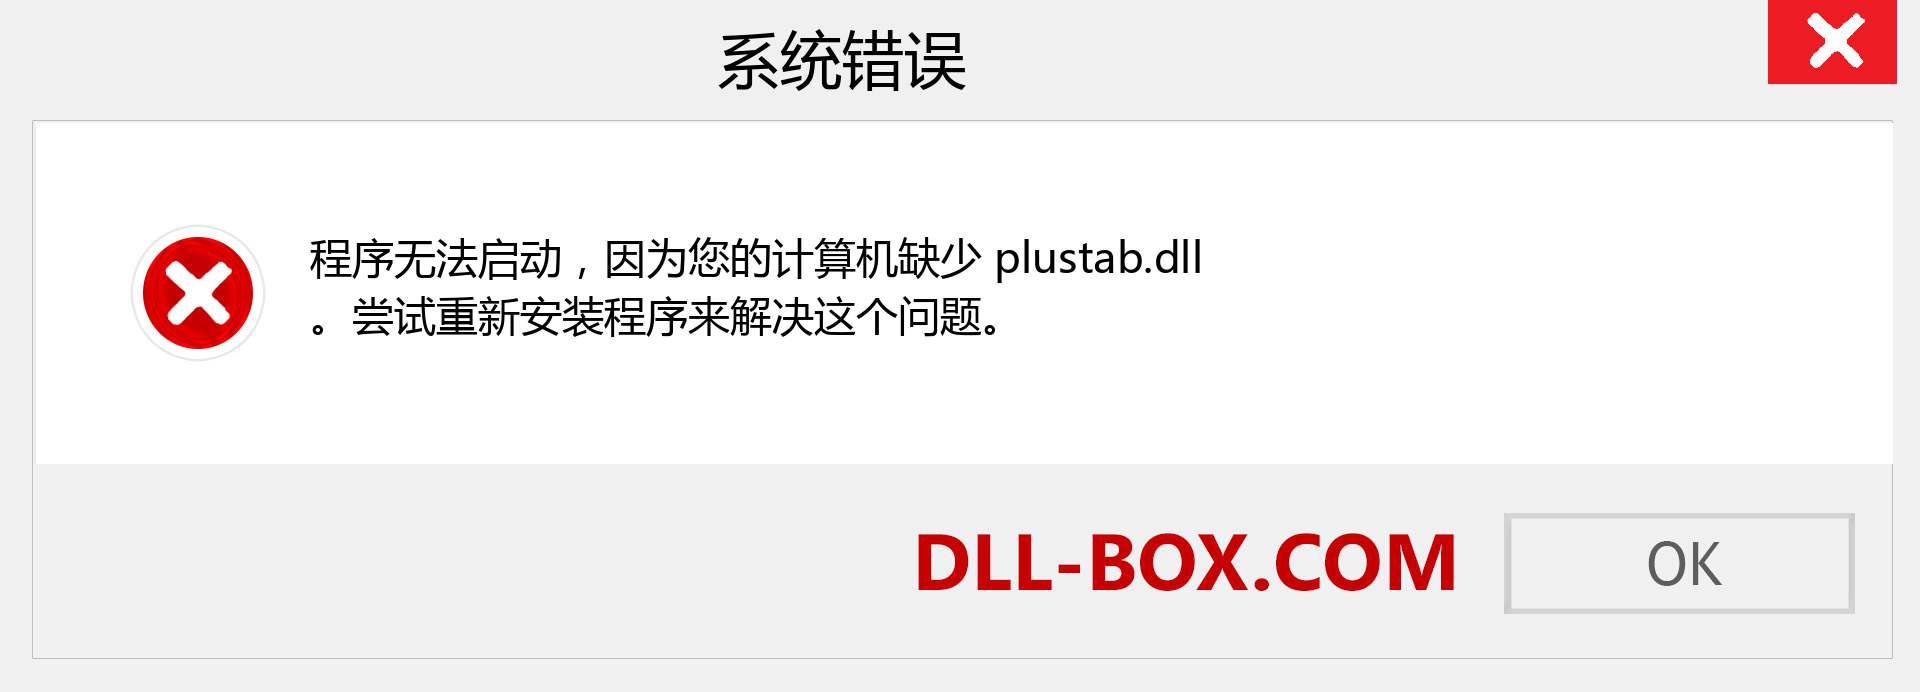 plustab.dll 文件丢失？。 适用于 Windows 7、8、10 的下载 - 修复 Windows、照片、图像上的 plustab dll 丢失错误